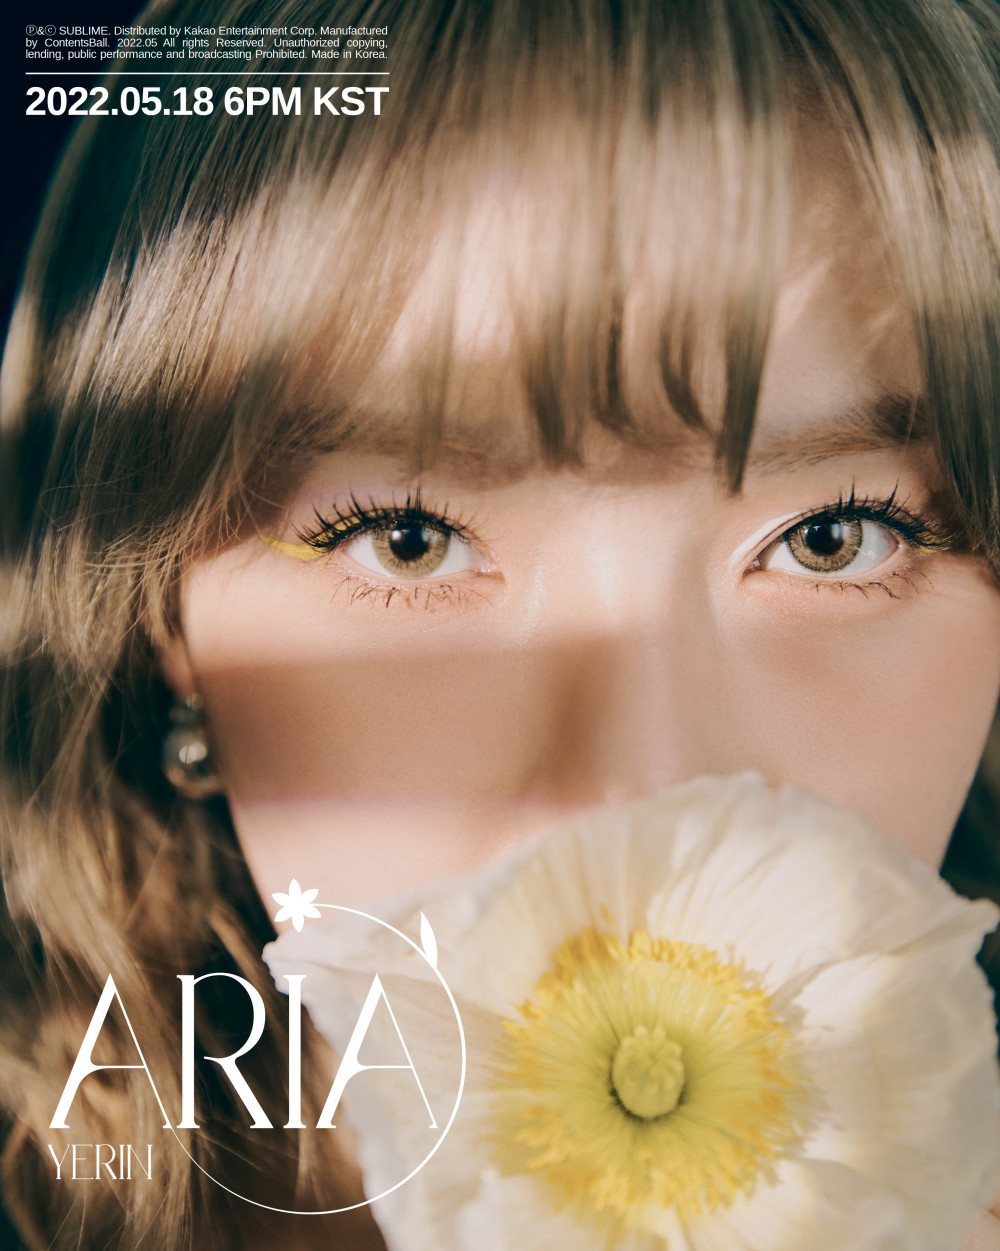 [Дебют] Йерин (GFriend) мини-альбом «ARIA»: музыкальный клип